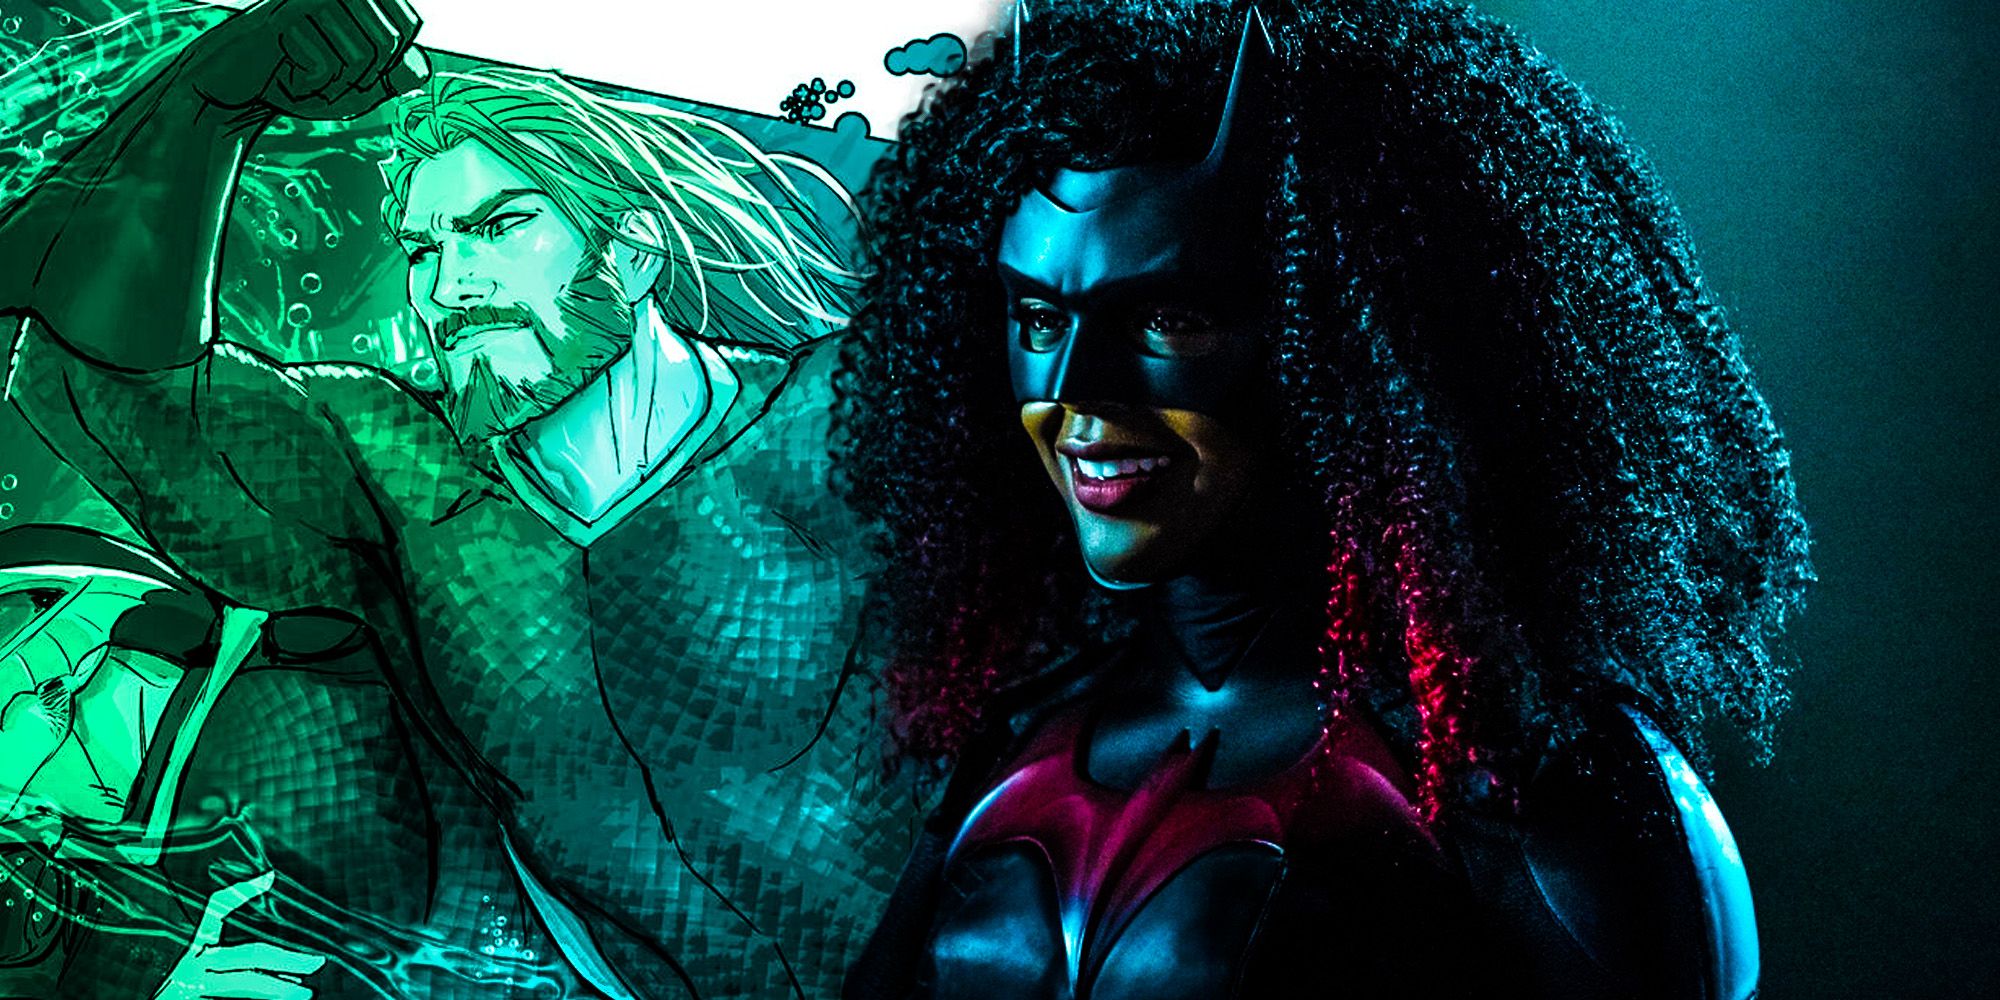 Batwoman season 2 confirms aquaman exists in the arrowverse